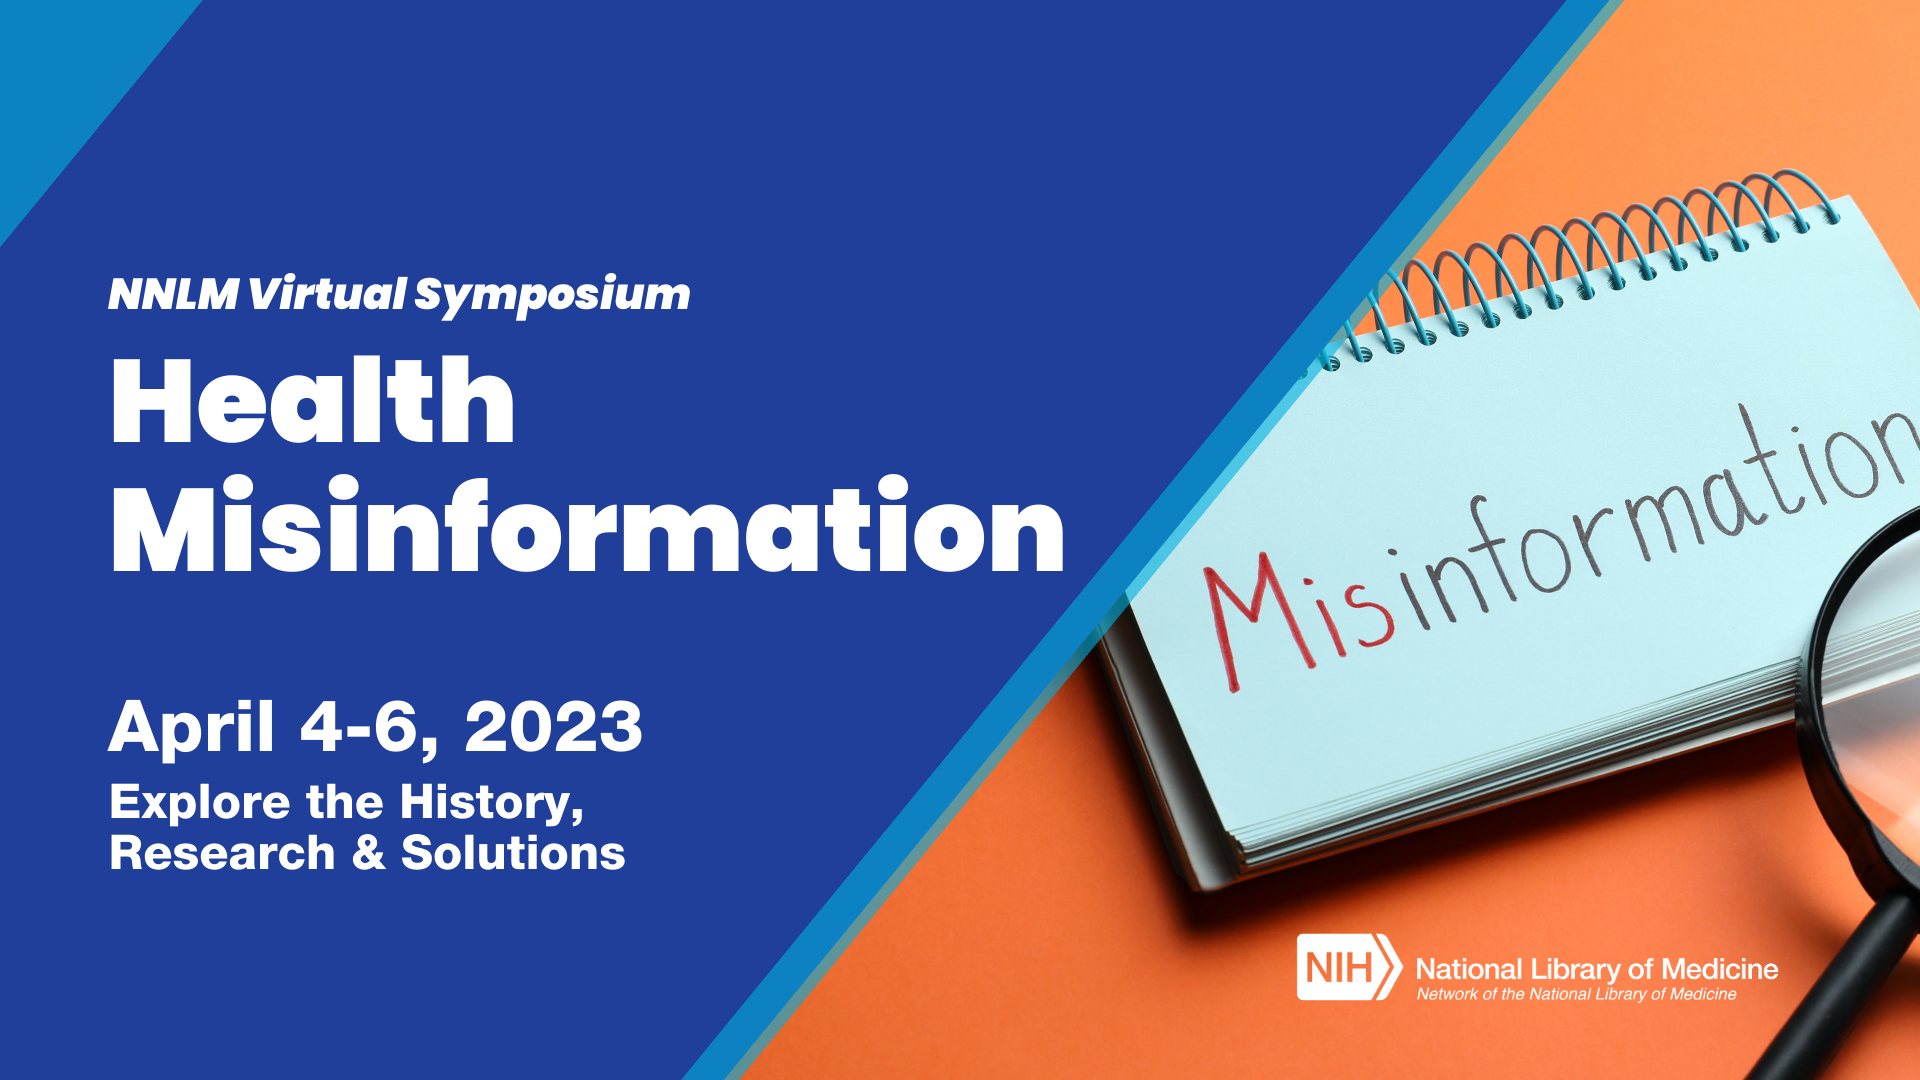 NNLM Virtual Symposium on Health Misinformation April 4-6, 2023